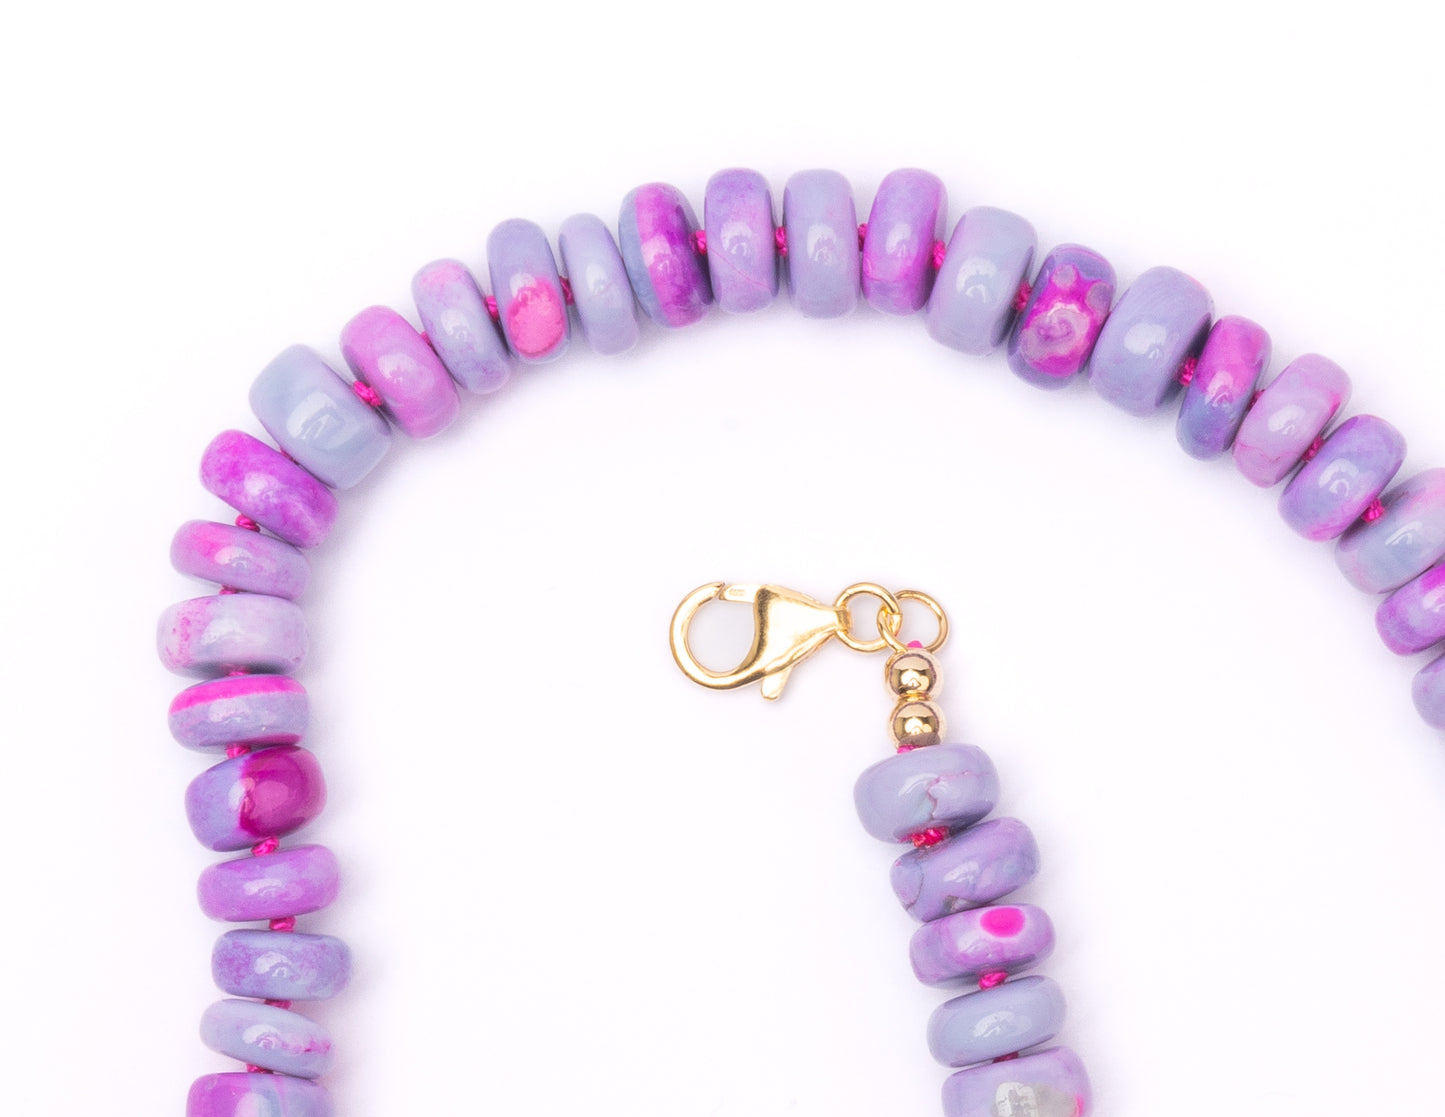 Fuschia Lavender Hot Pink Ombré Opal Candy Necklace